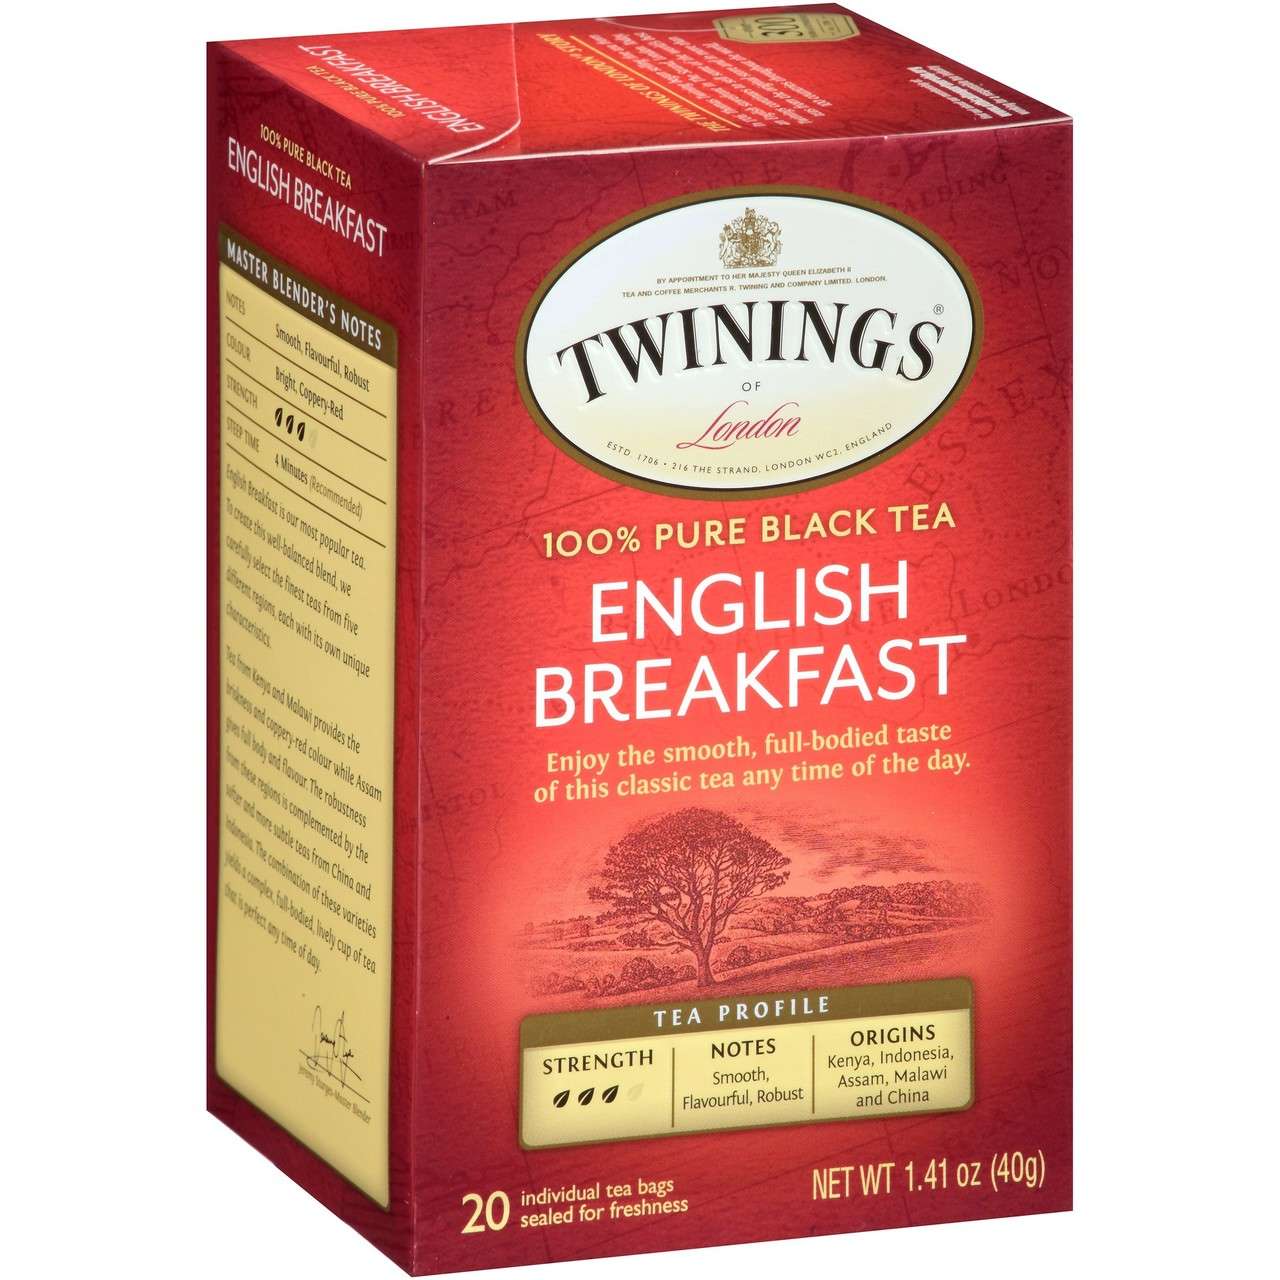 English Breakfast - Twinings - Ratings & Reviews